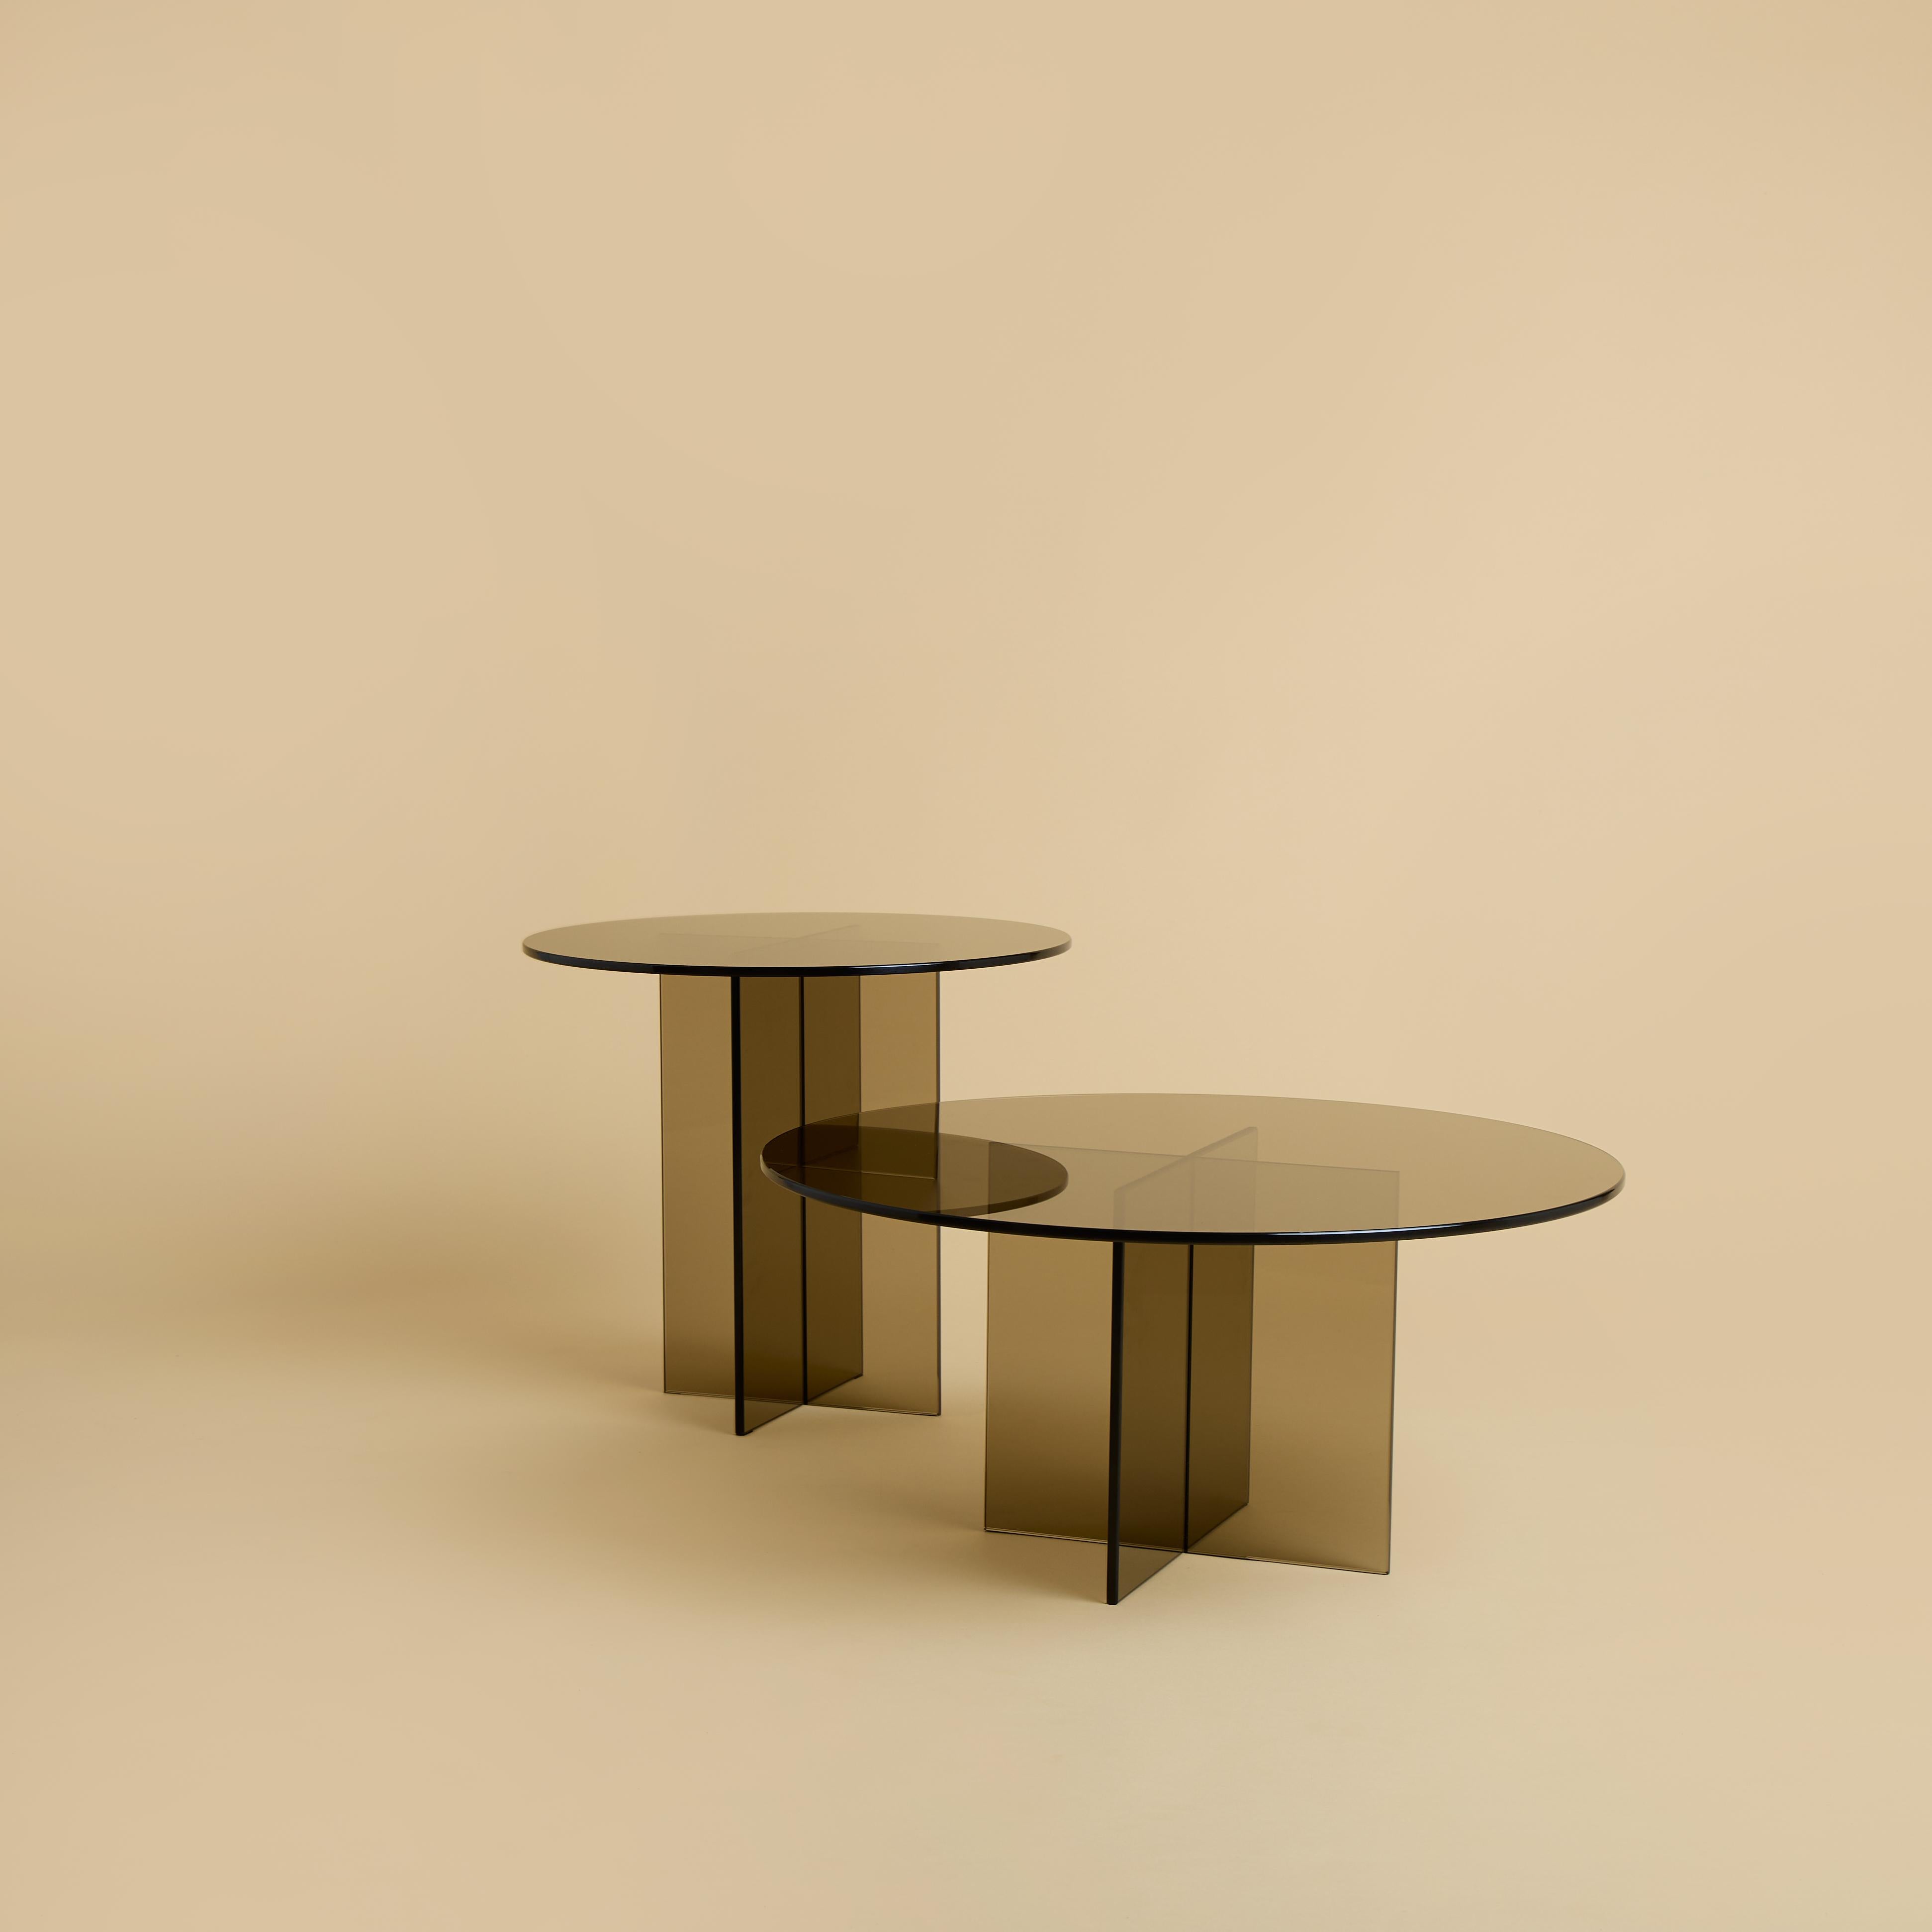 italien Table basse en verre bronze, fabriquée en Italie en vente